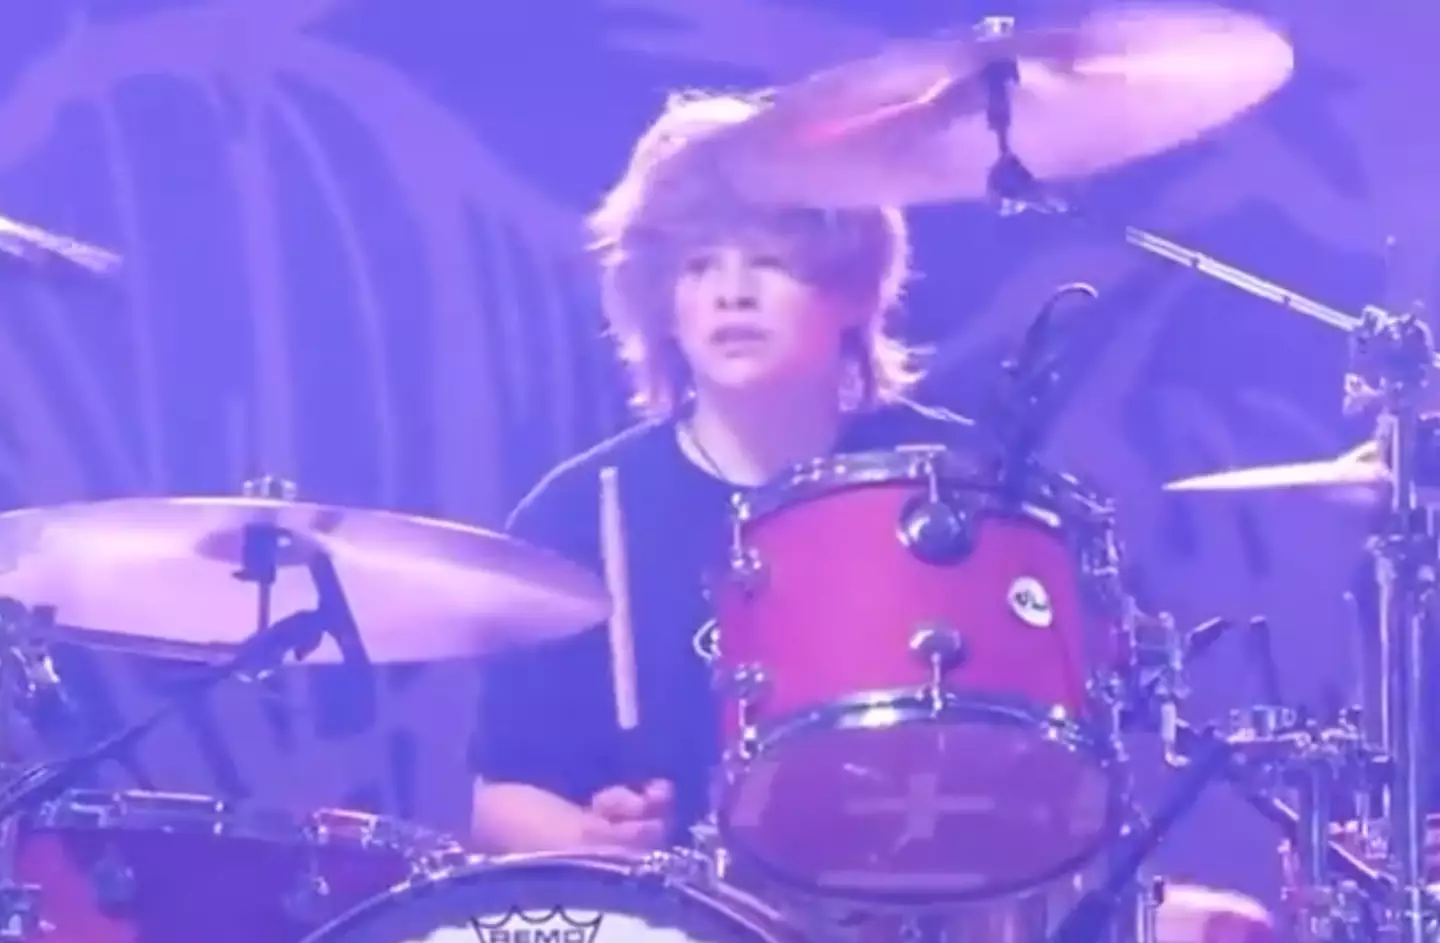 Shane Hawkins on the drums at Wembley Stadium last night.